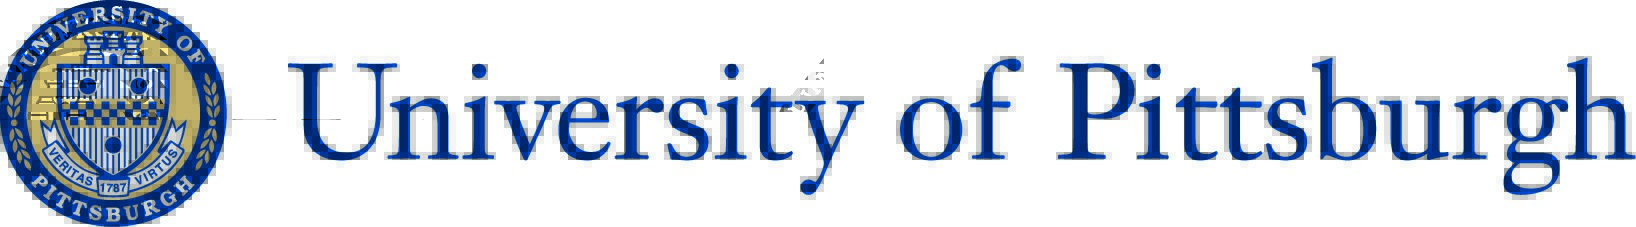 University of Pittsburgh Logo - University of Pittsburgh logo - ACRM